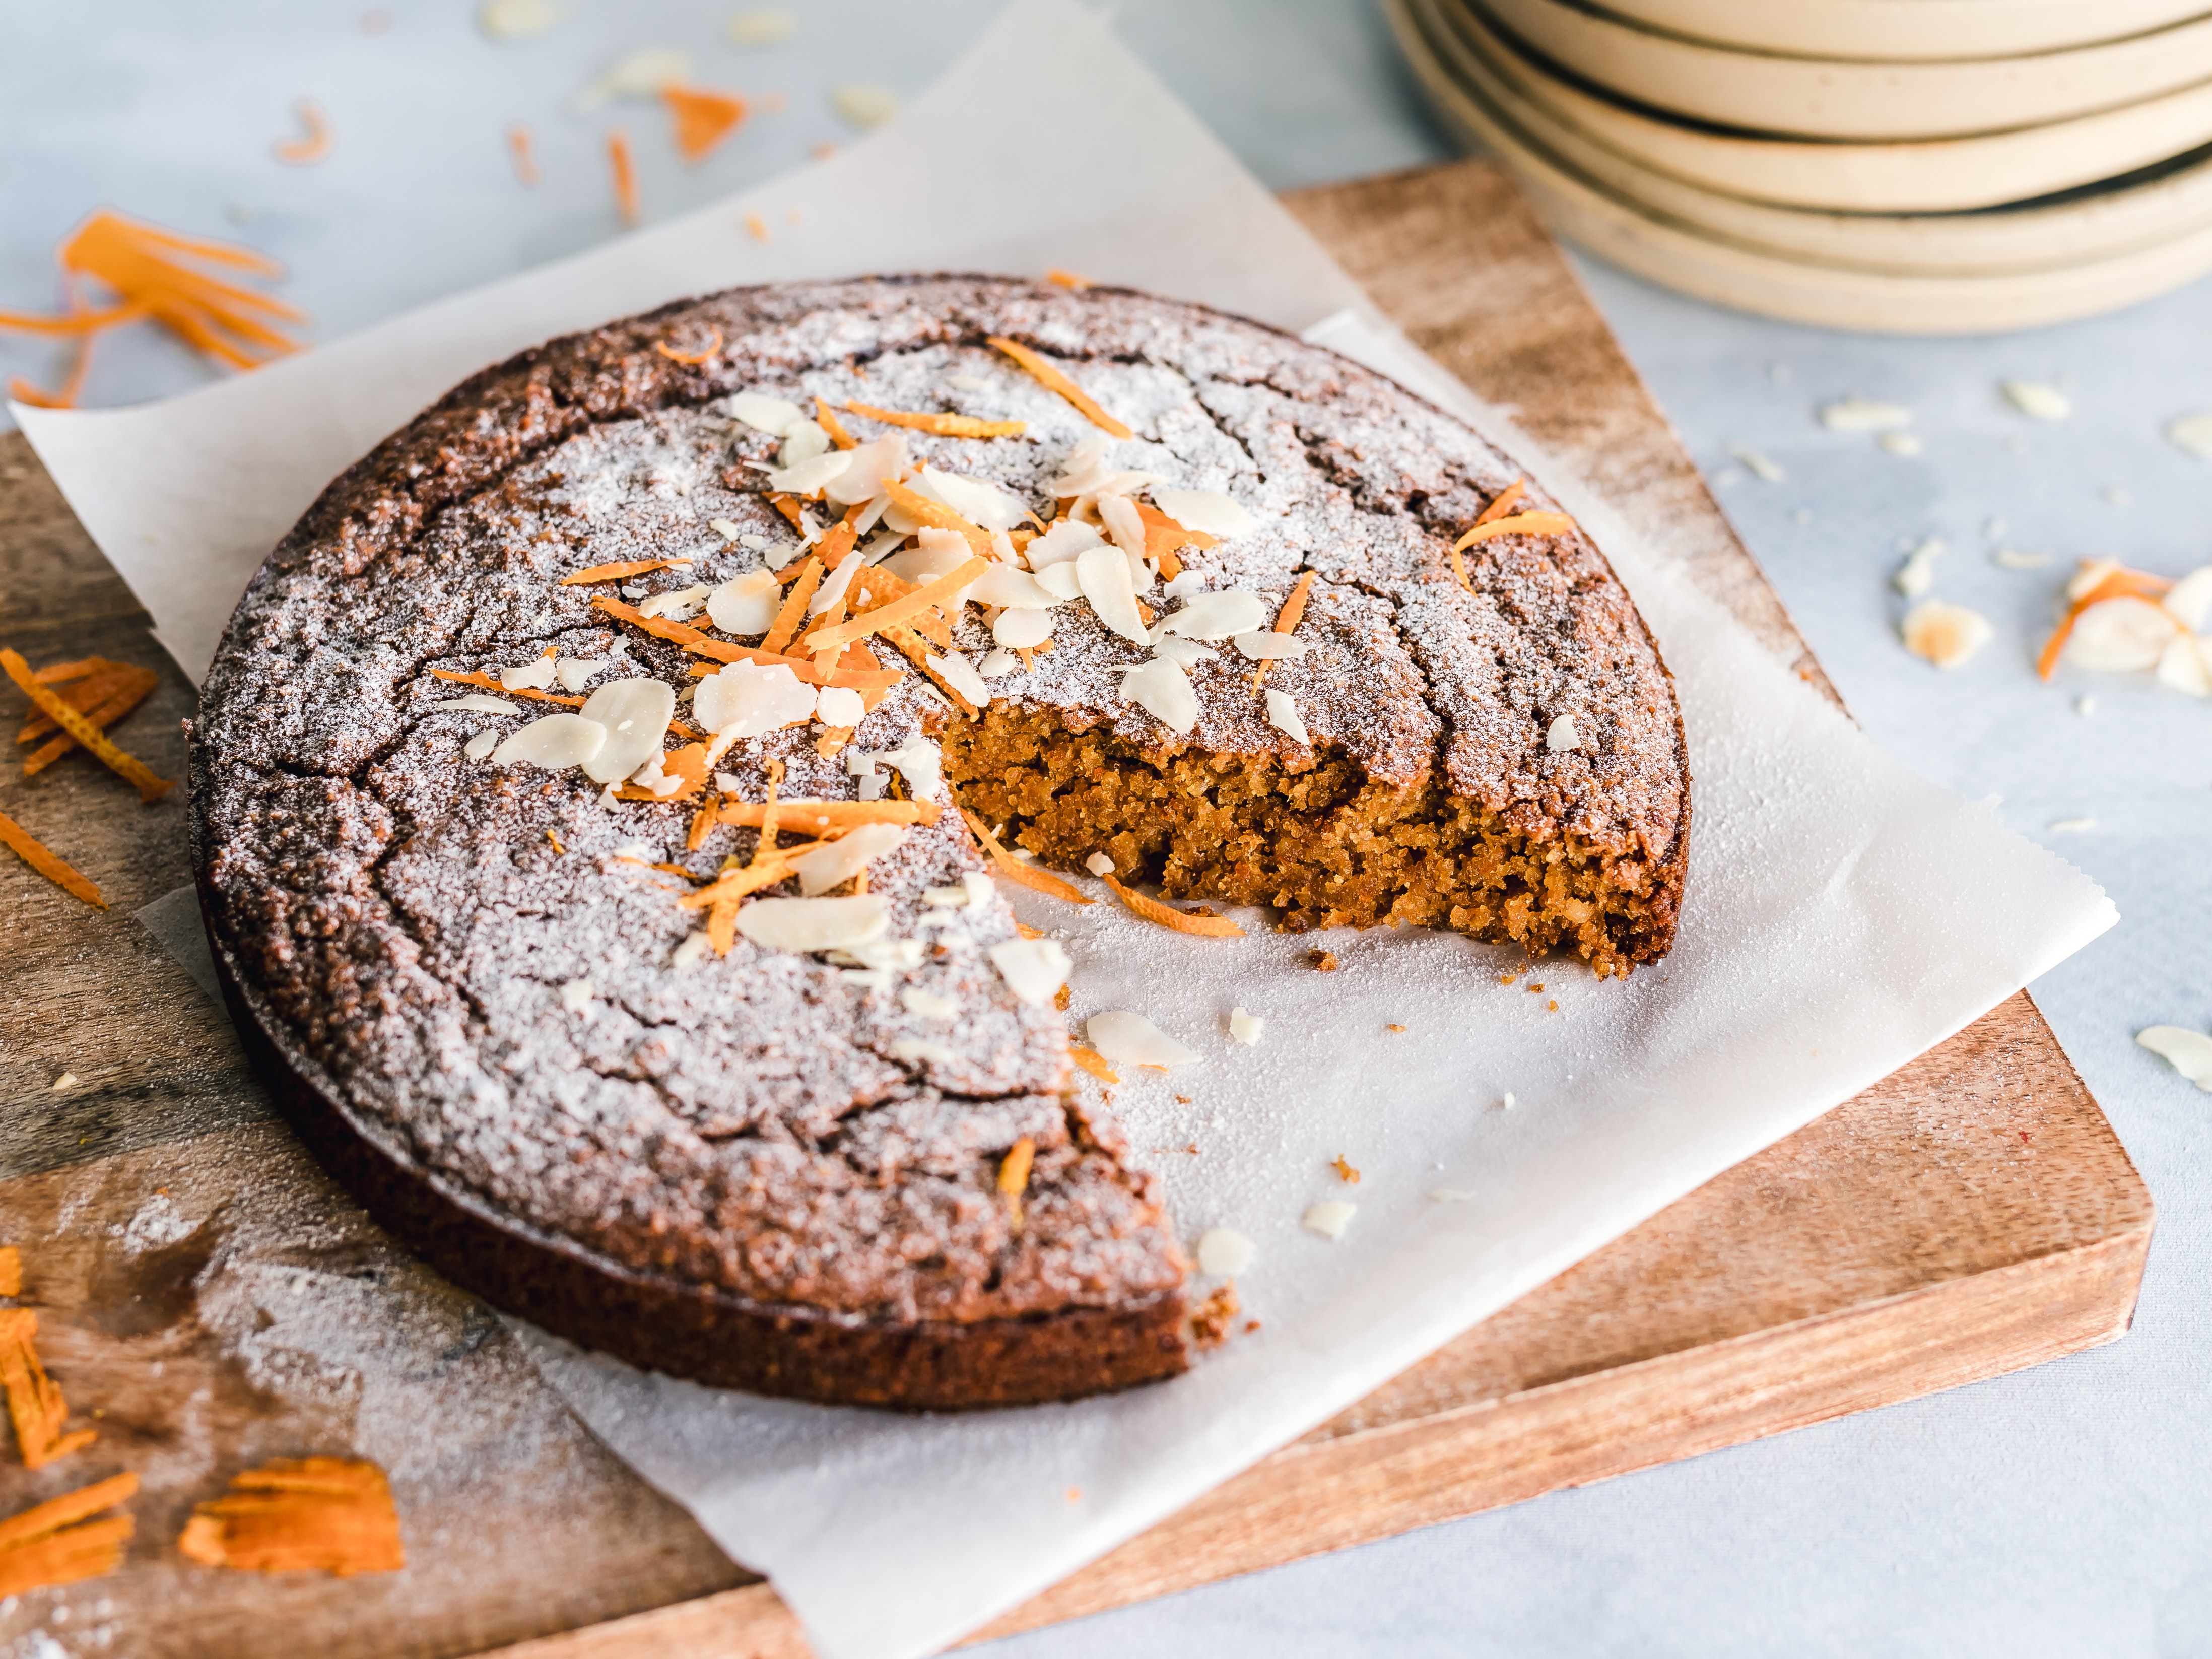 Tiana Fairtrade Organics Carrot Cake Goes Coconut Recipe